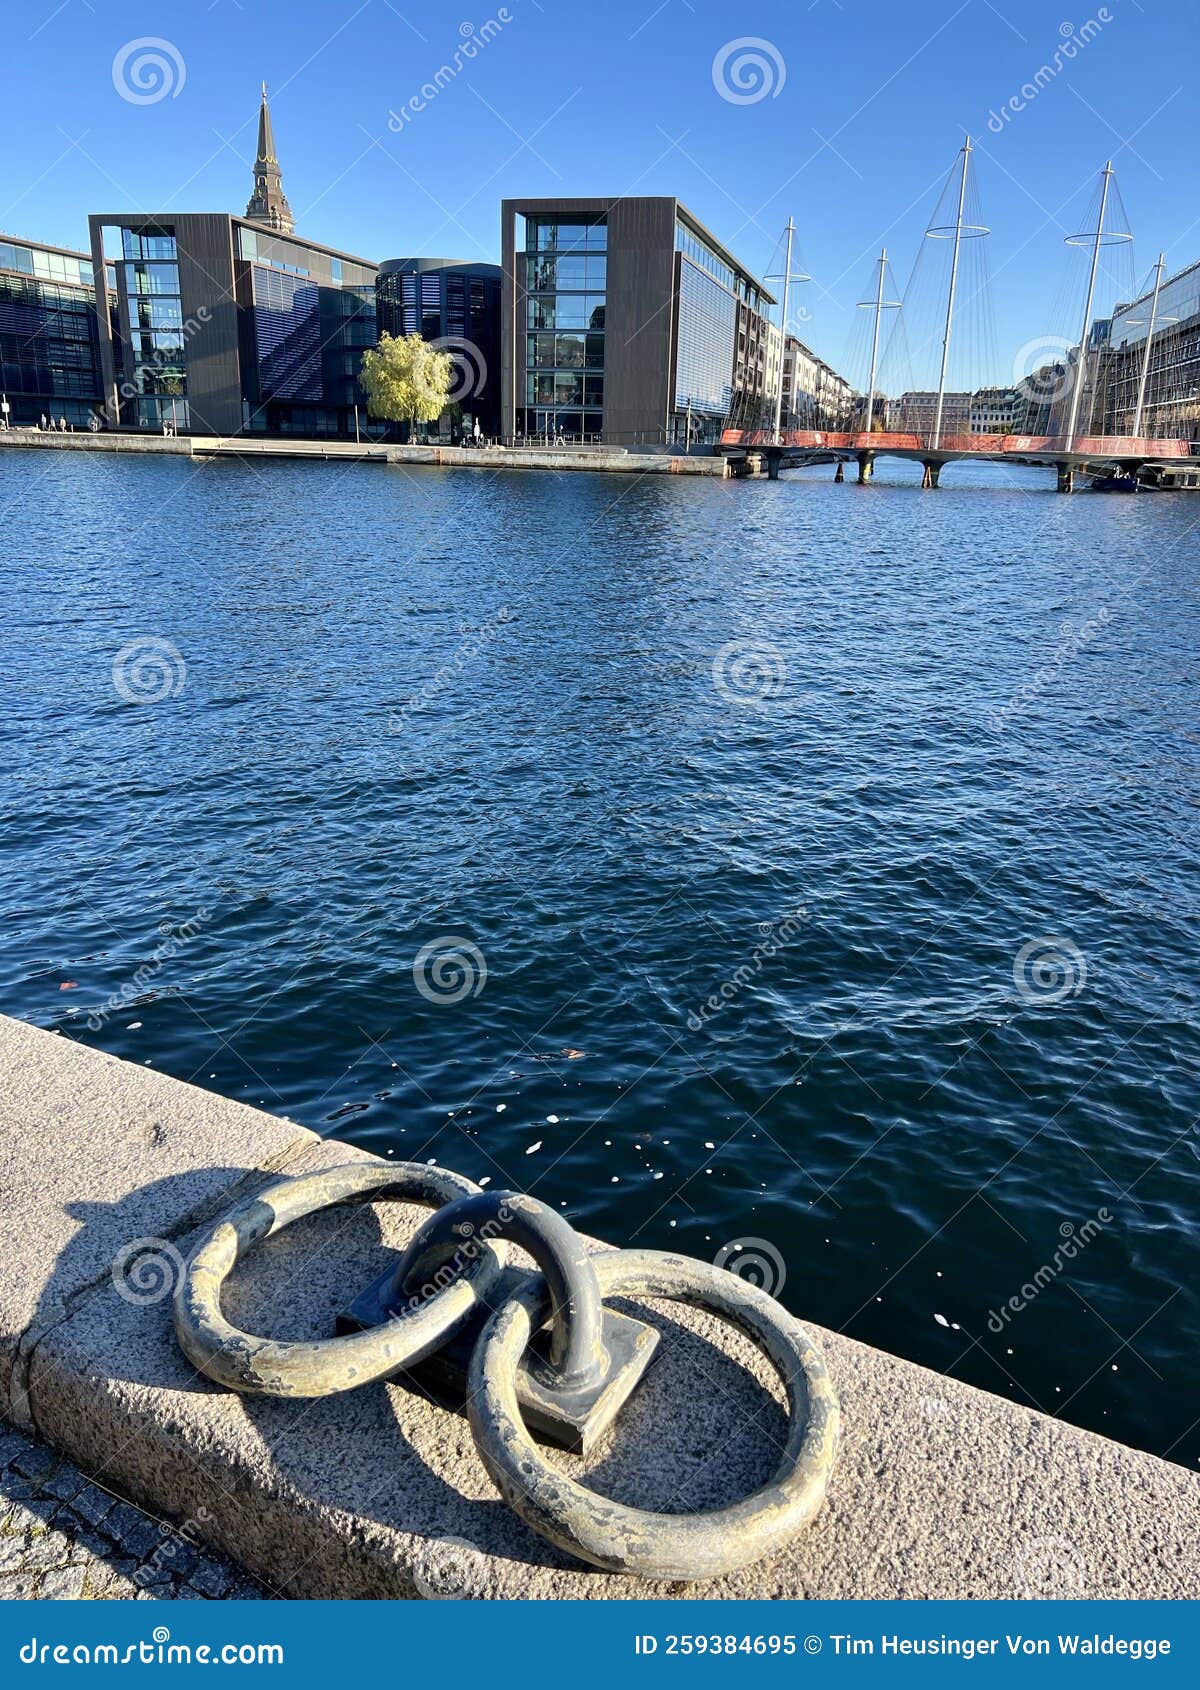 Copenhagen Inner Harbor with Circle Bridge, Denmark Stock Image - Image ...